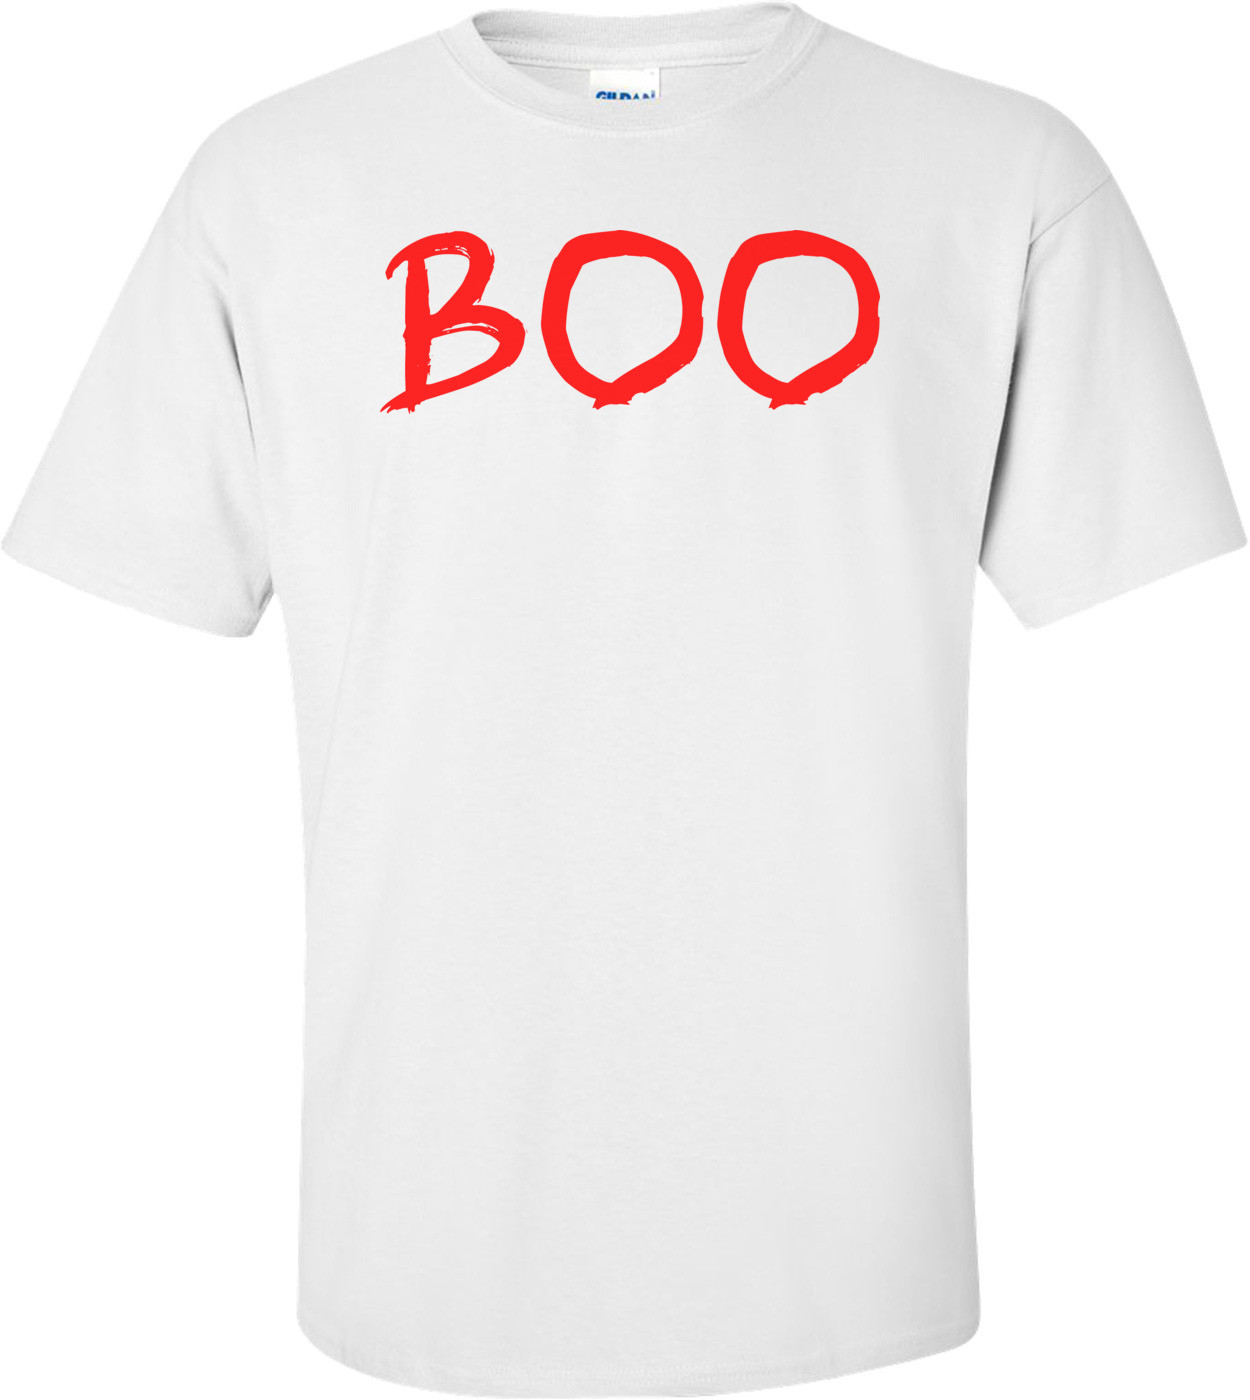 Boo - Halloween Shirt